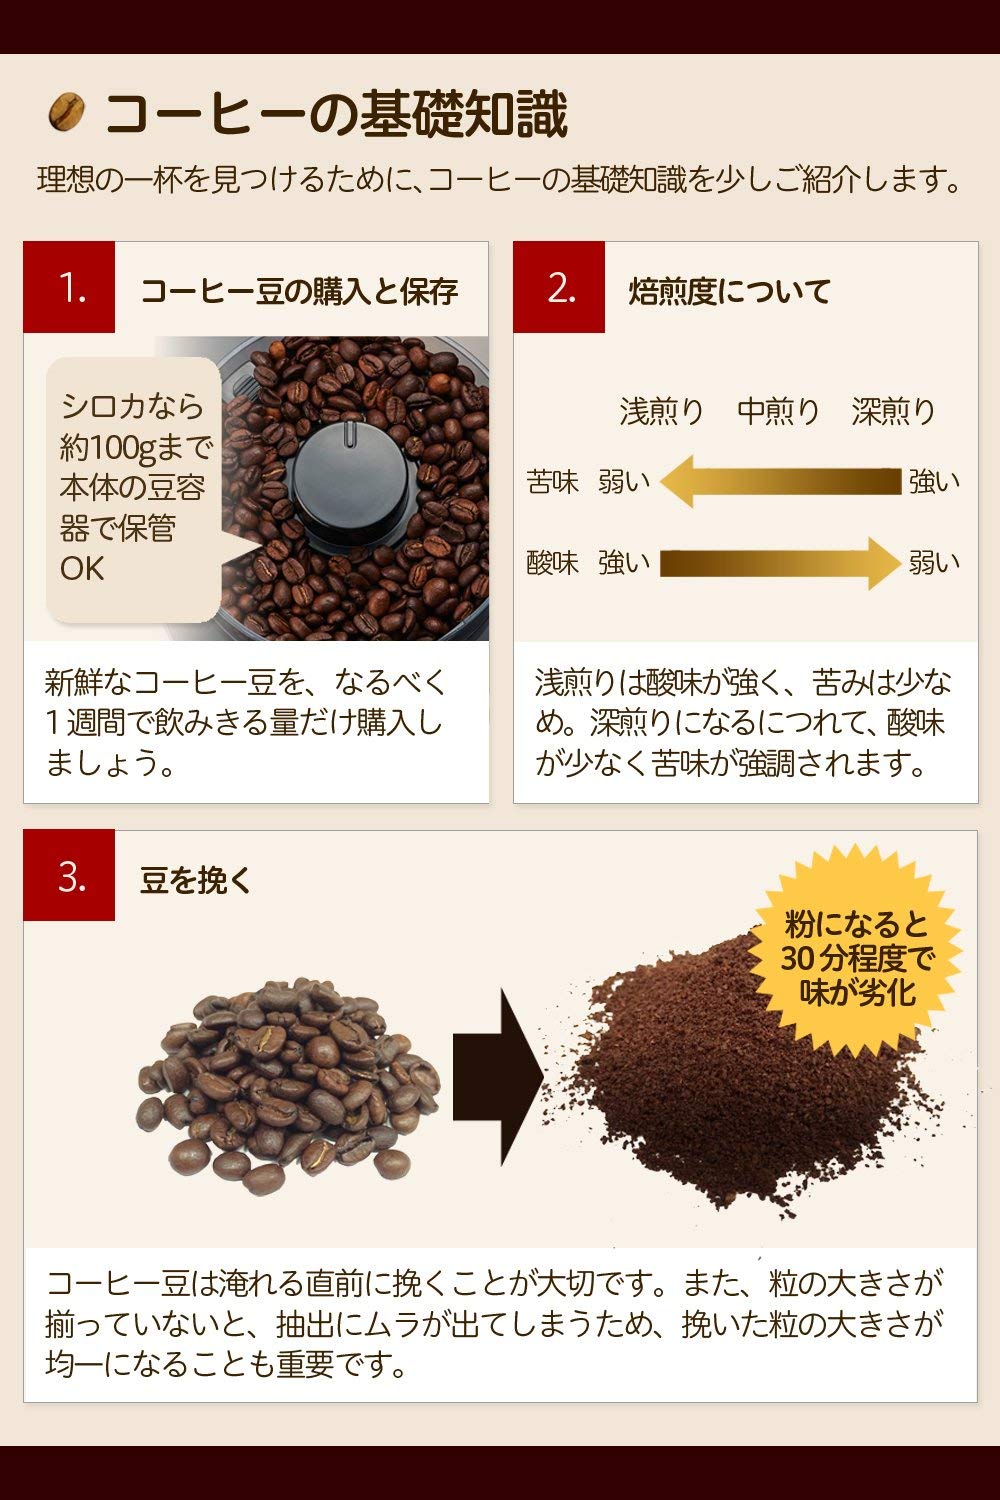 【siroca(シロカ)】全自動コーヒーメーカー[豆・粉両対応]